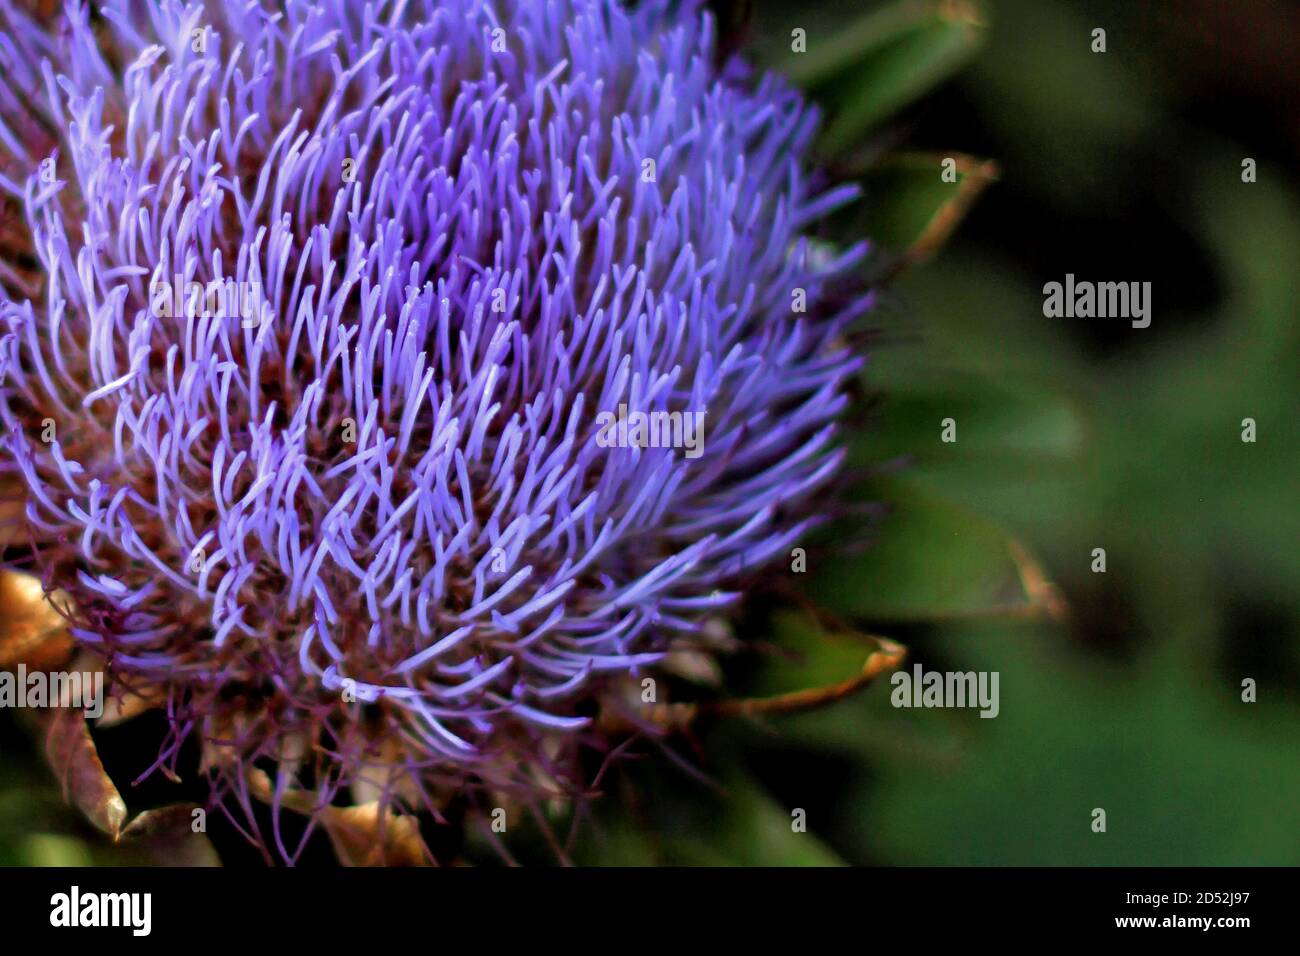 Closeup view of purple artichoke flower Stock Photo